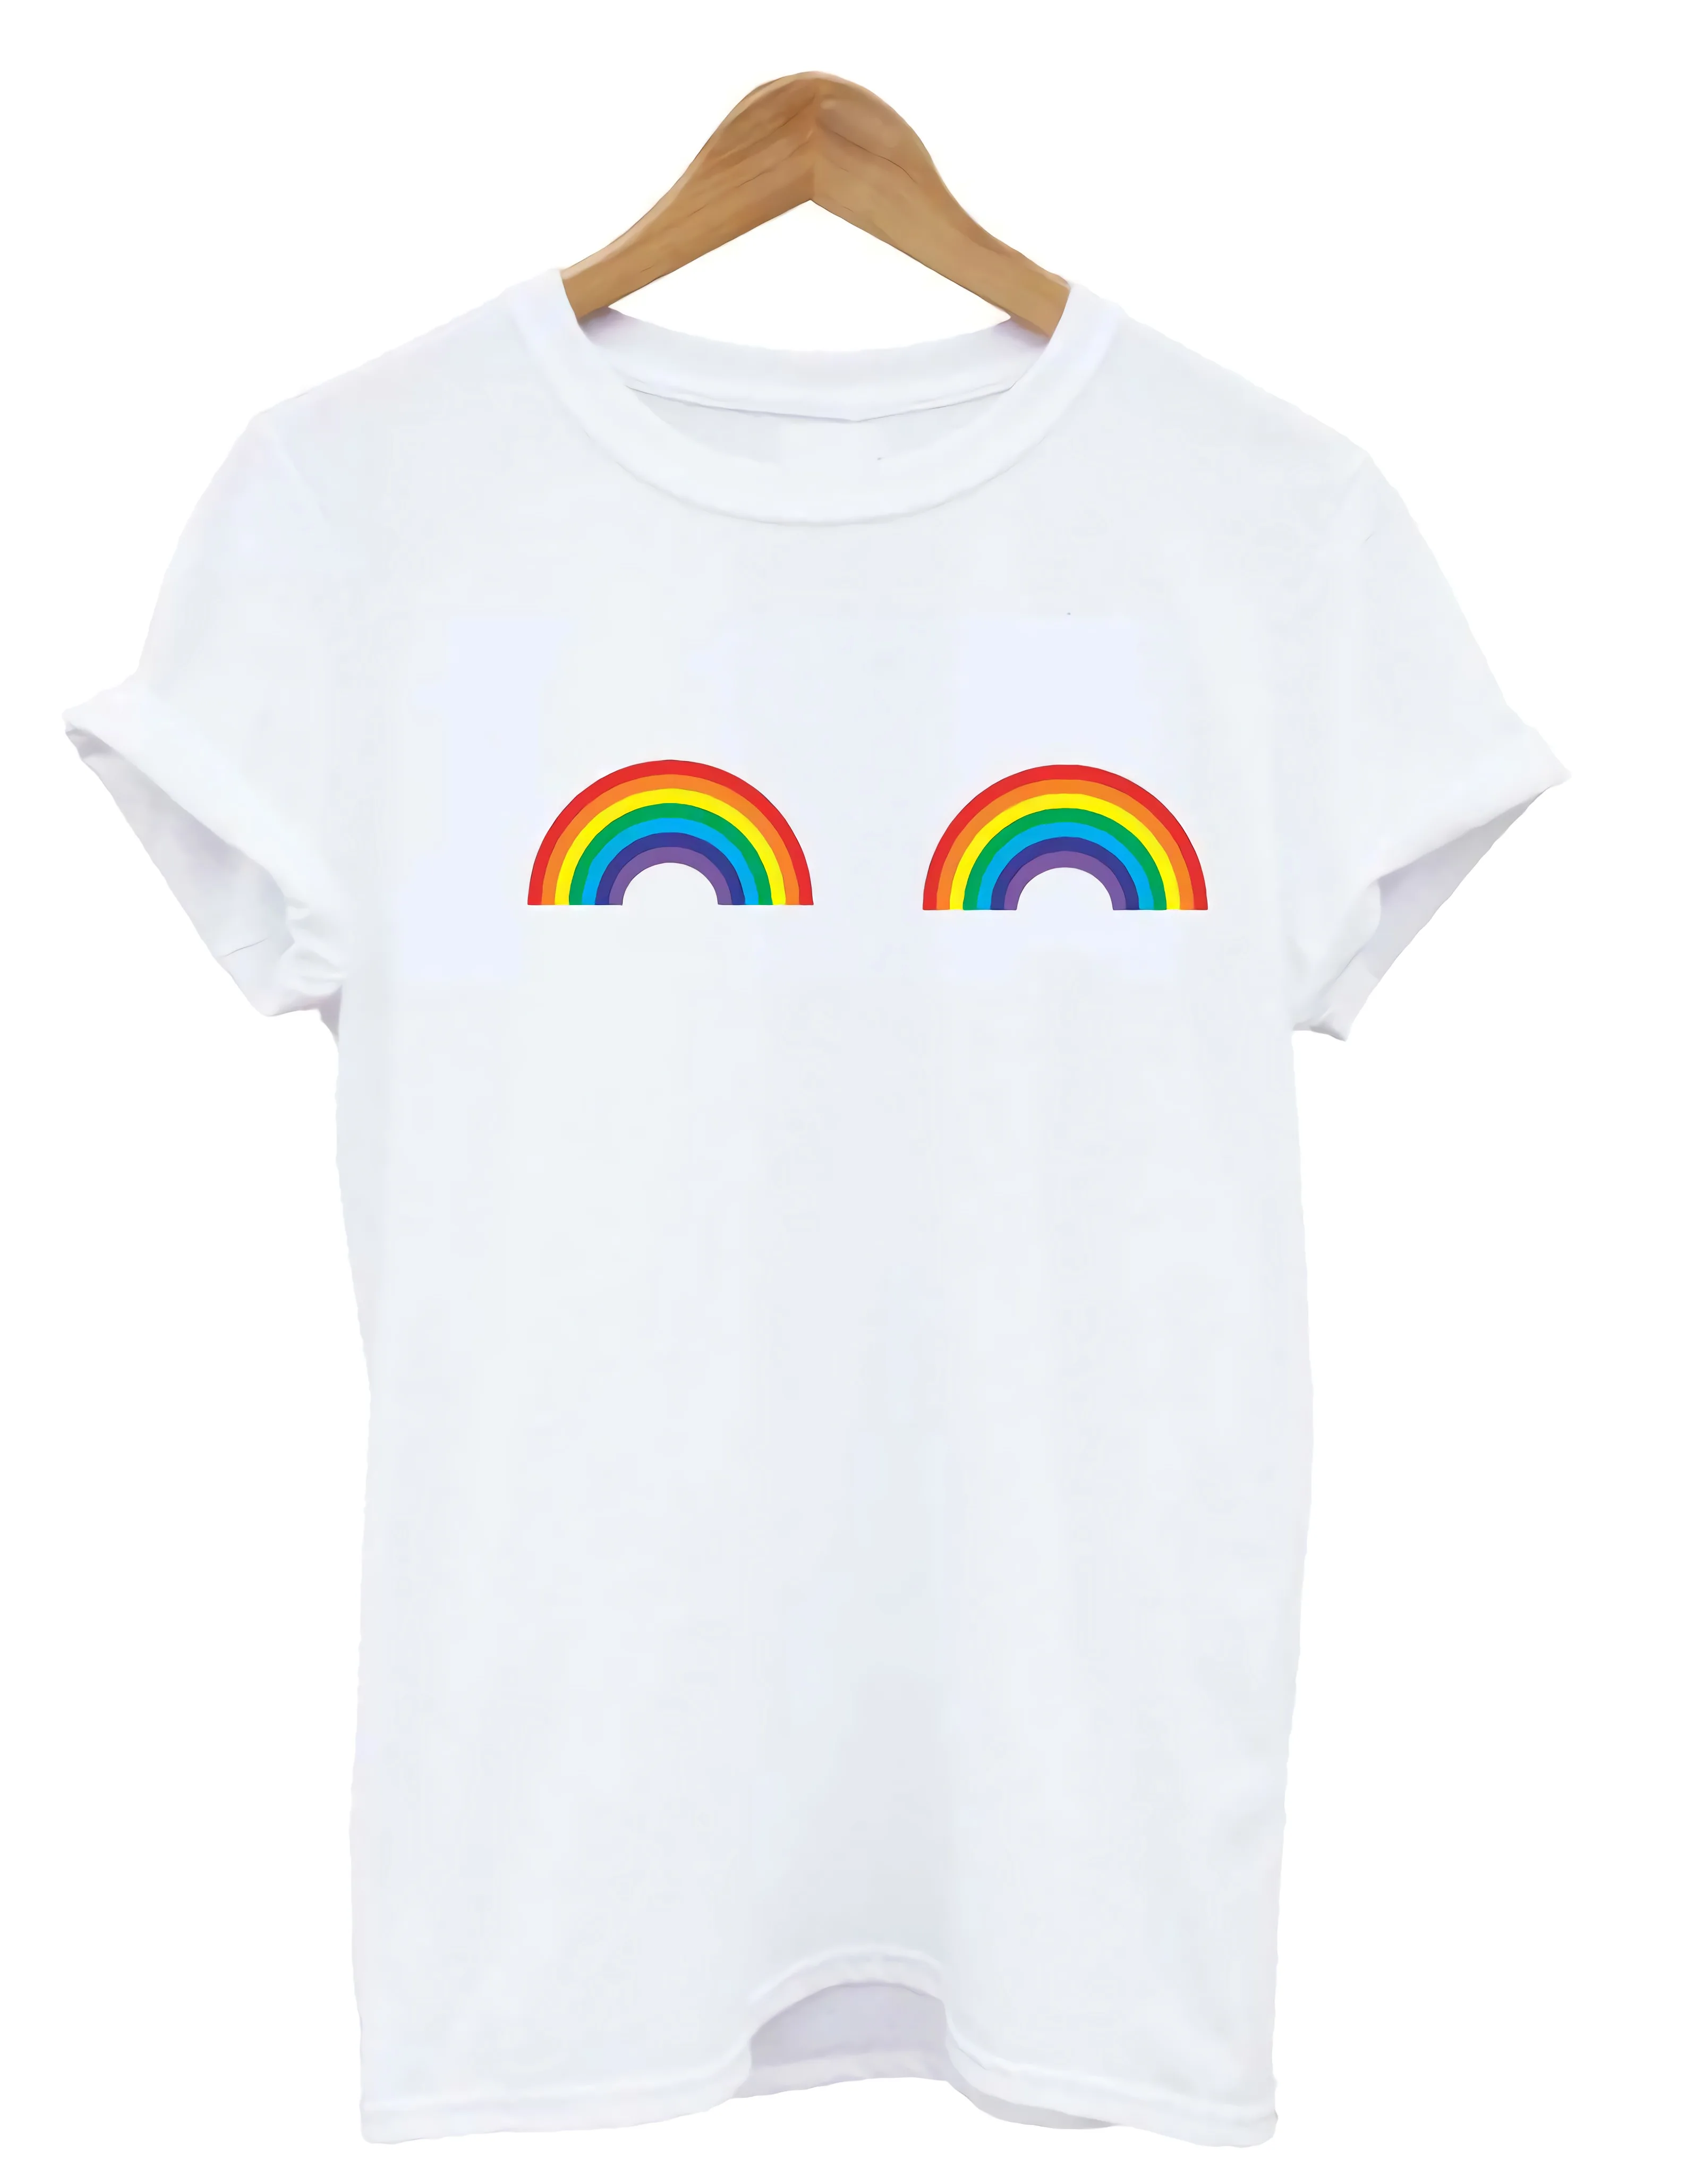 

Rainbow gay T-shirt LGBT Pride homosexual love fashion woman Boobs top slogan tee t shirt